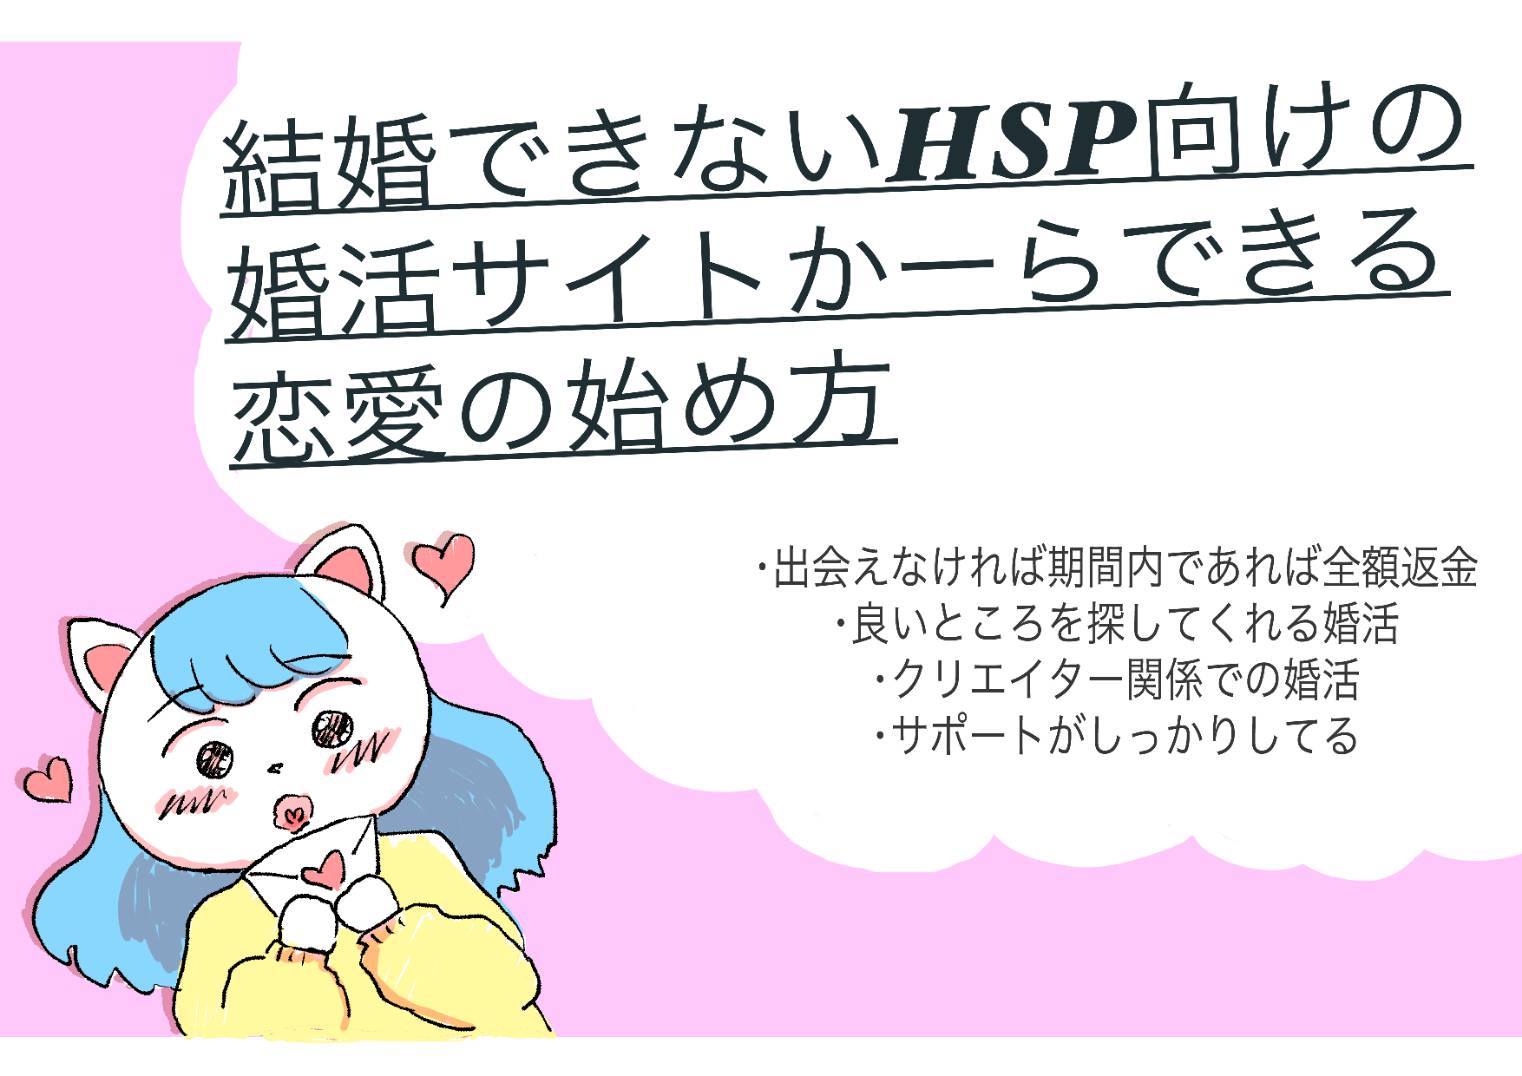 HSP向けの婚活サイト